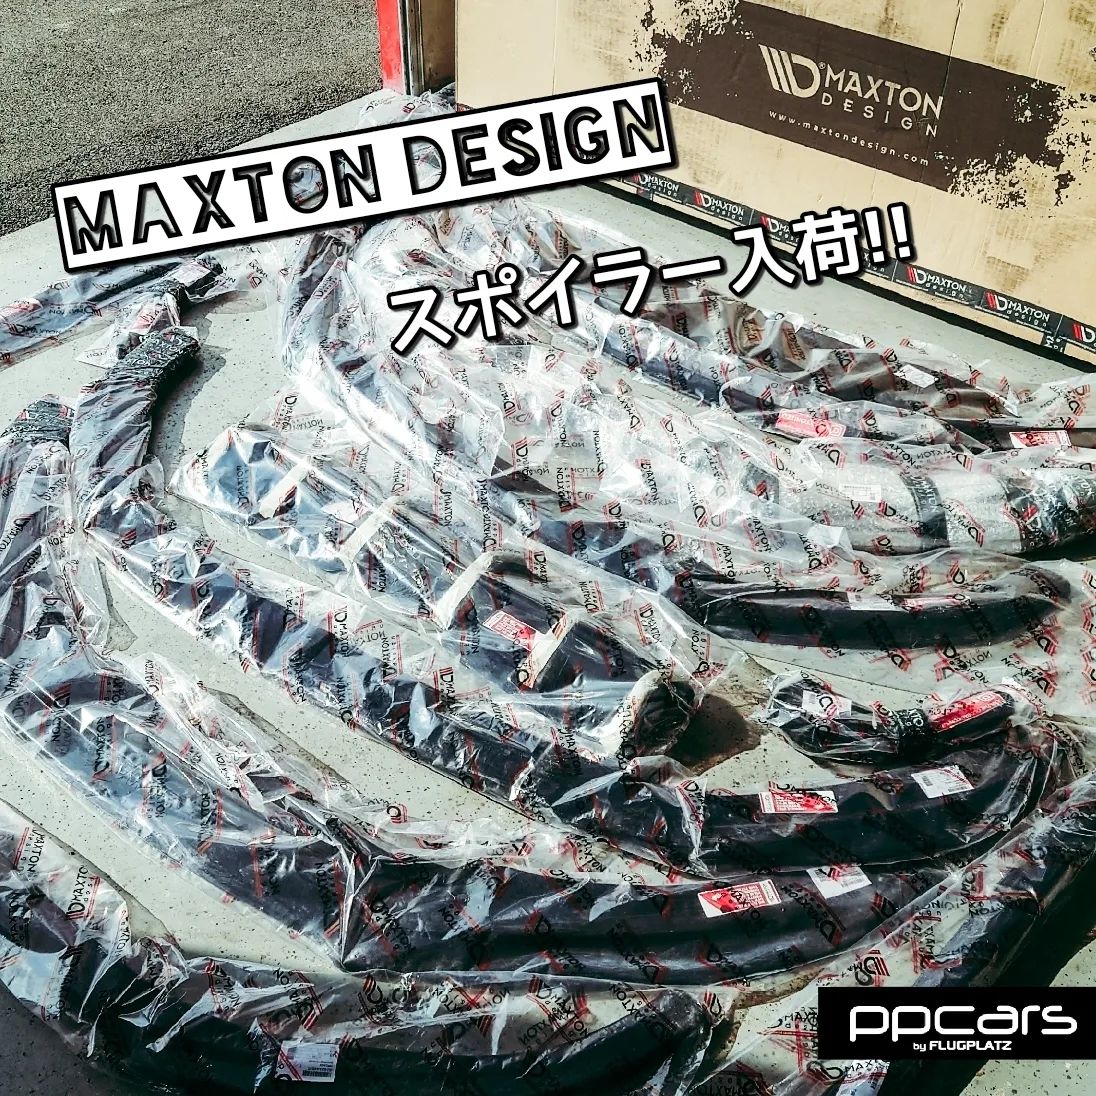 Maxton Design スポイラー 入荷 & 特価販売中!!